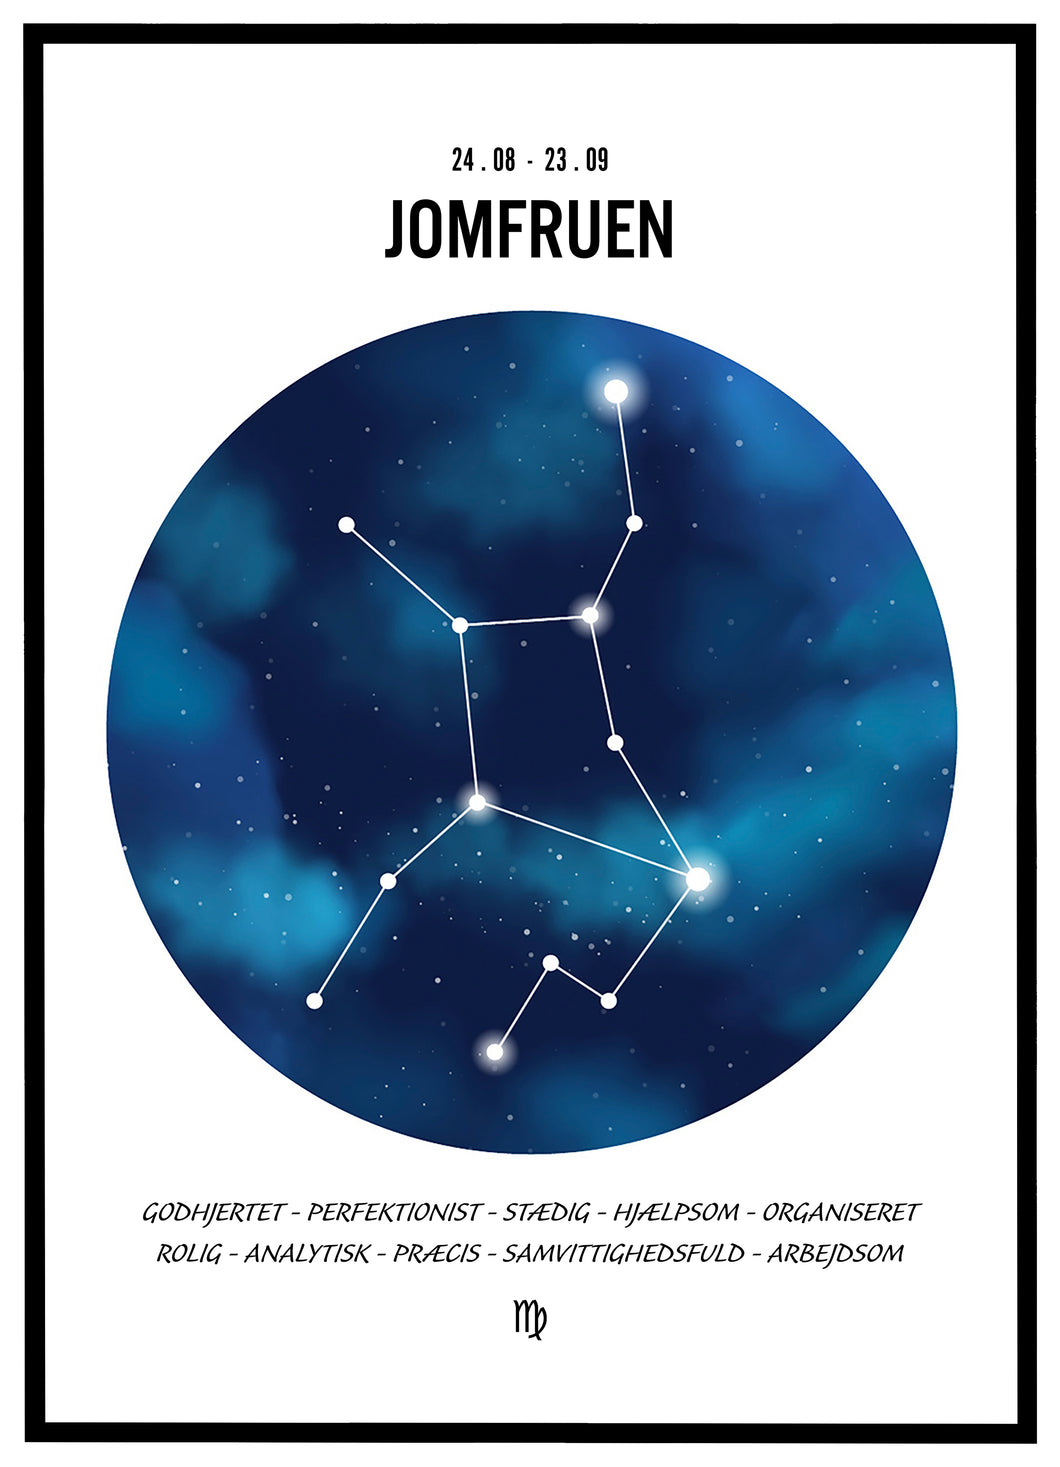 Stjernehimmel plakat - Jomfruen